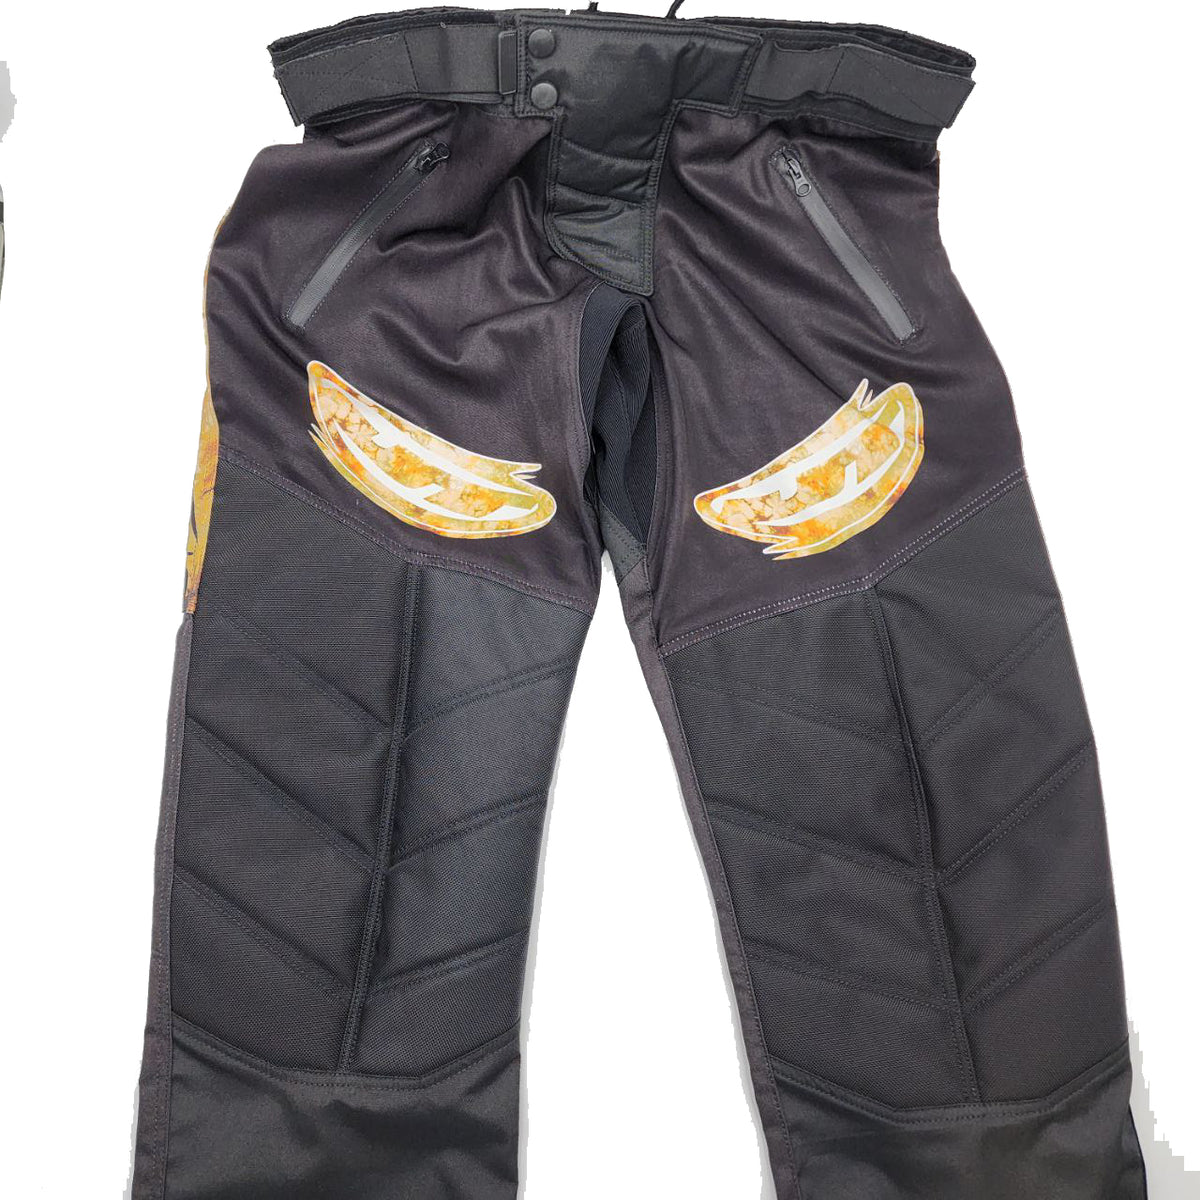 Jt Custom Pants | Paintball Padded Pants